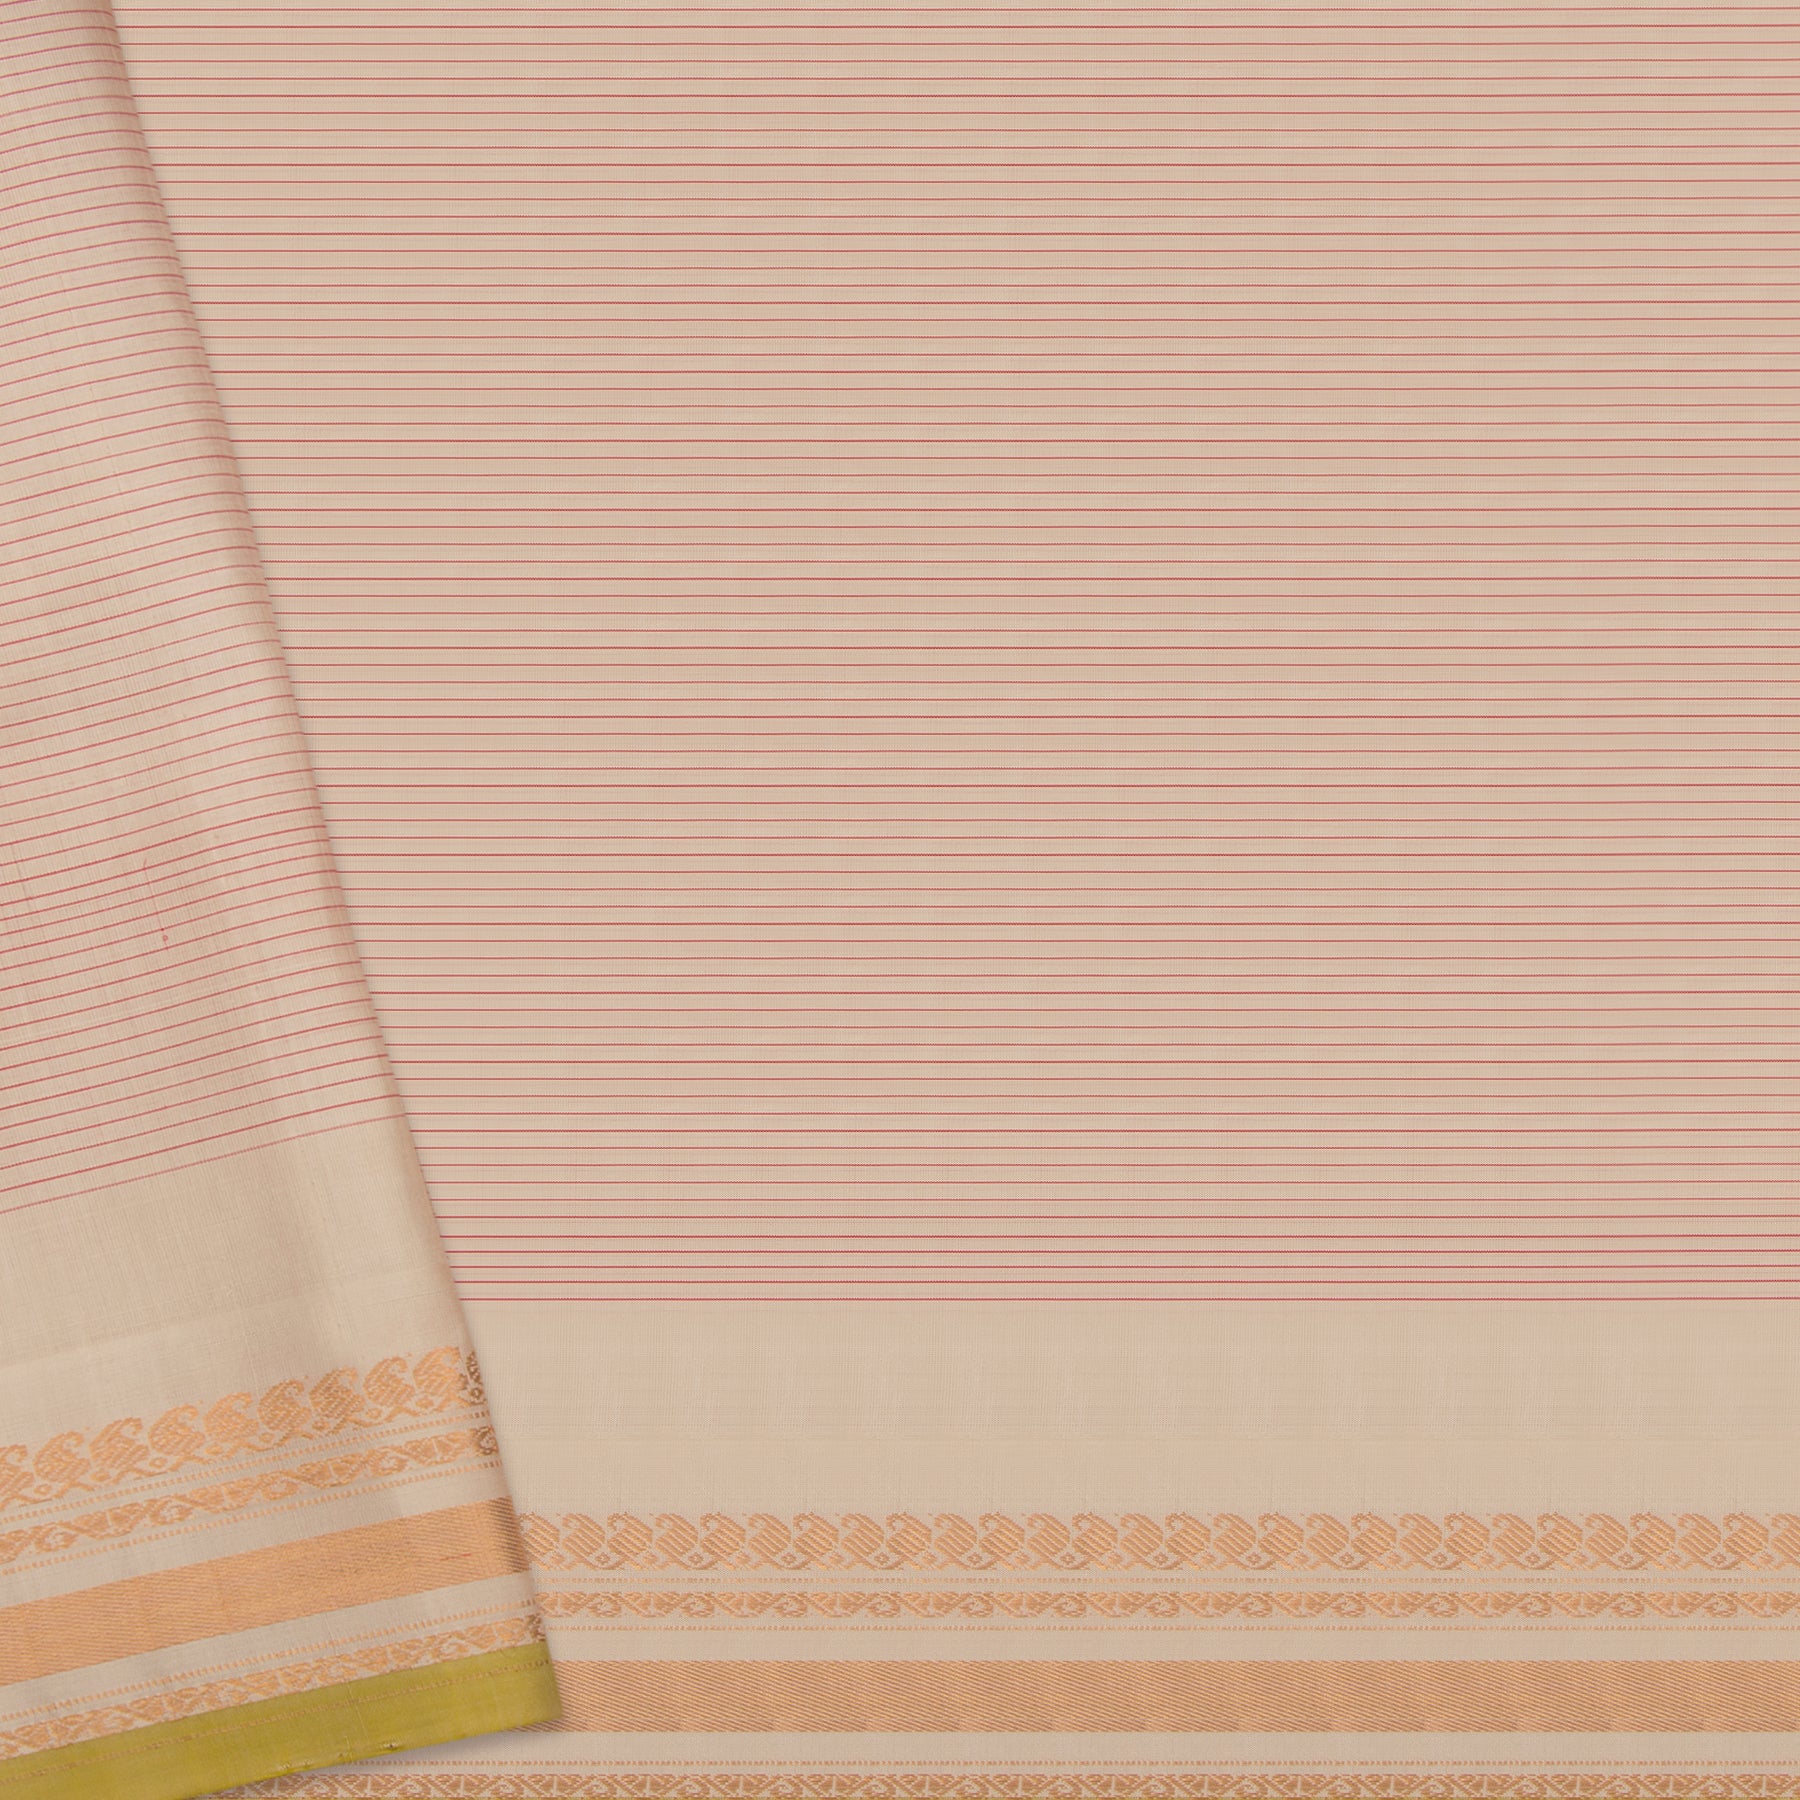 Kanakavalli Gadwal Silk/Cotton Sari 21-604-HS005-02369 - Blouse View